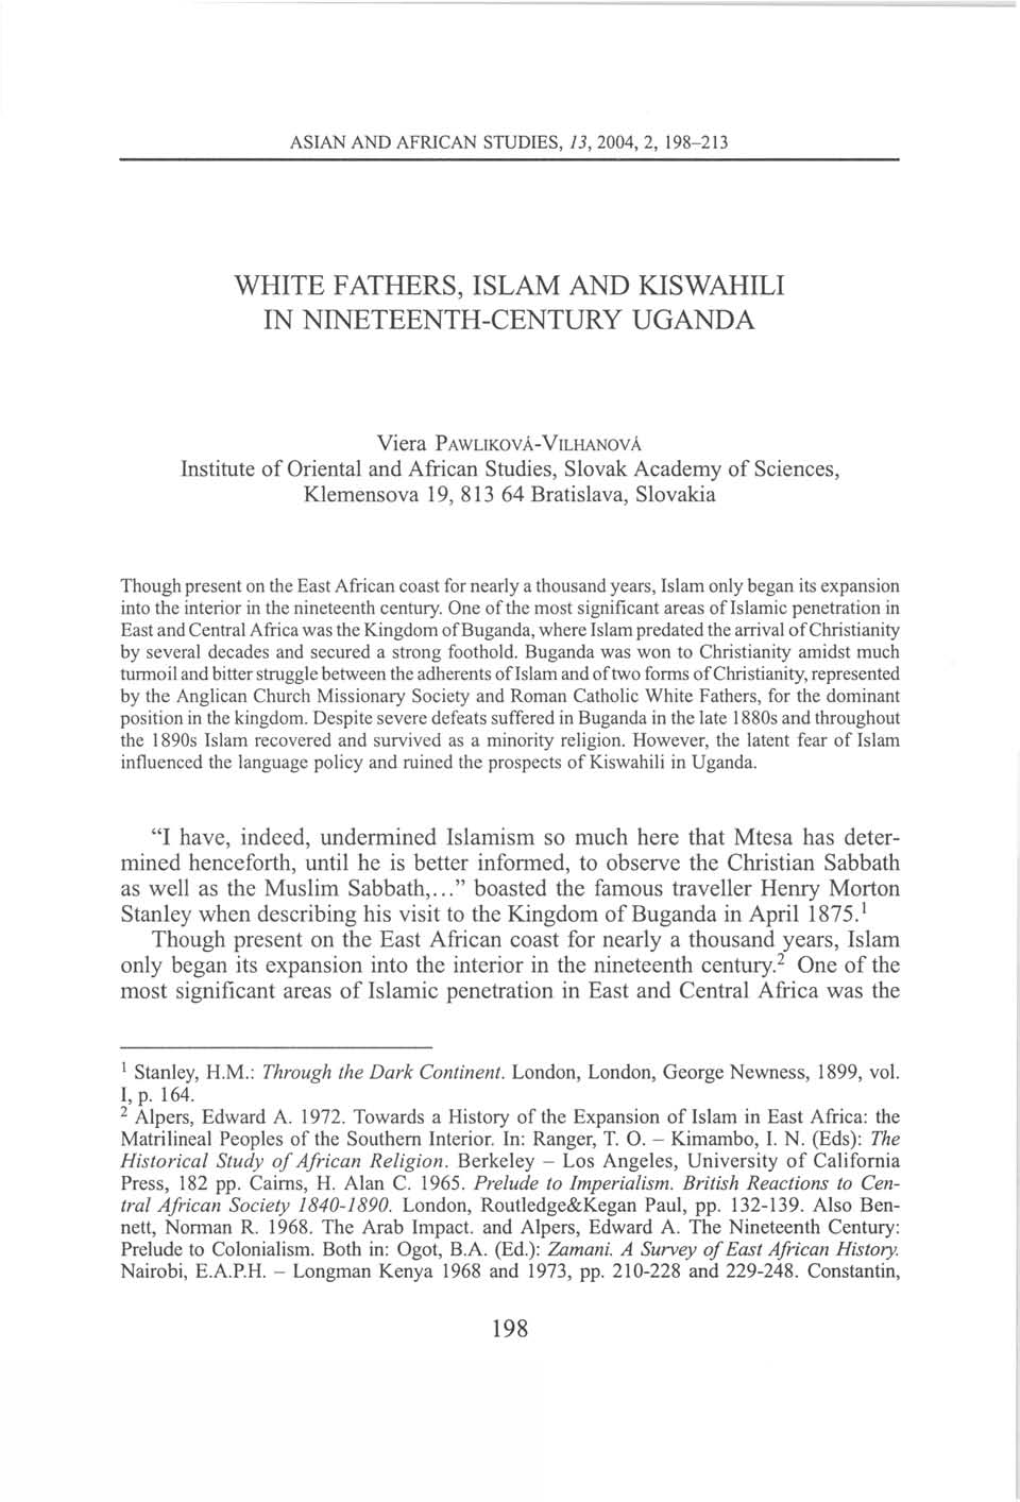 White Fathers, Islam and Kiswahili in Nineteenth-Century Uganda